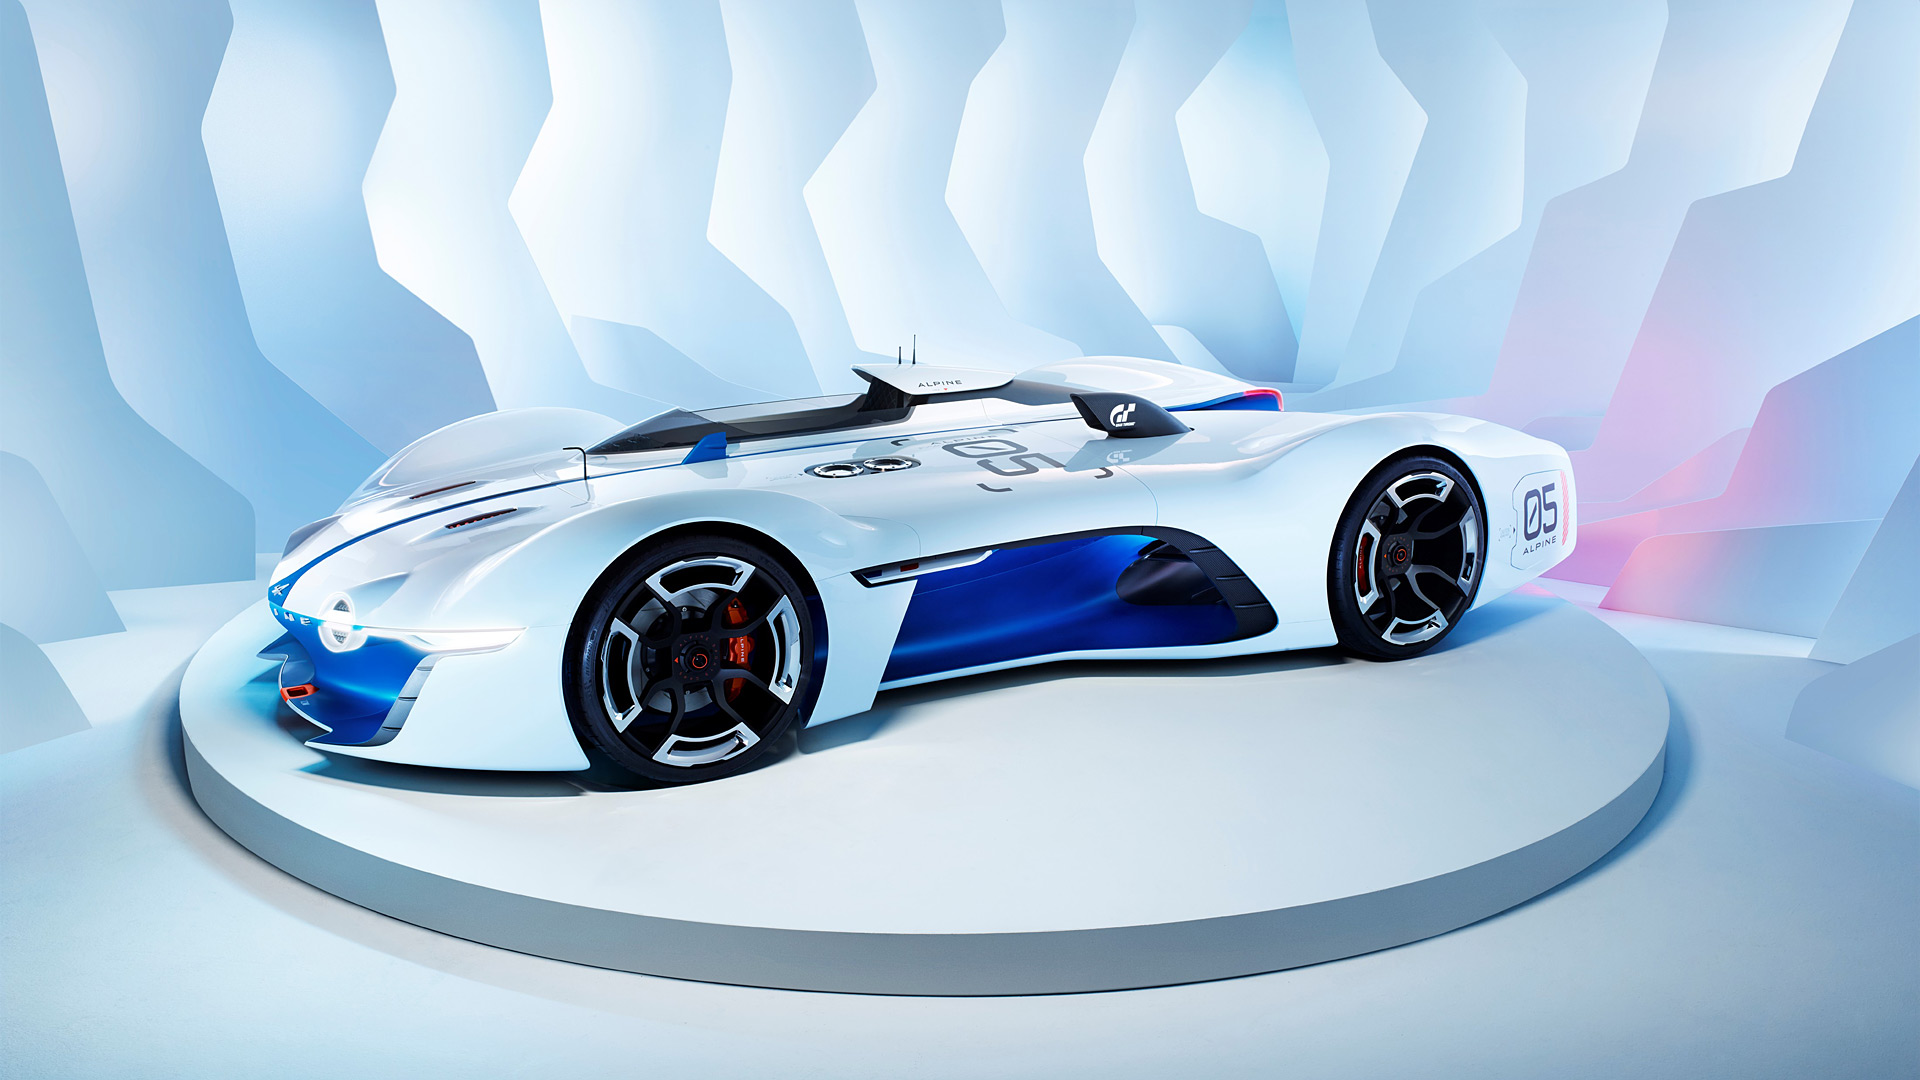  2015 Renault Alpine Vision Gran Turismo Concept Wallpaper.